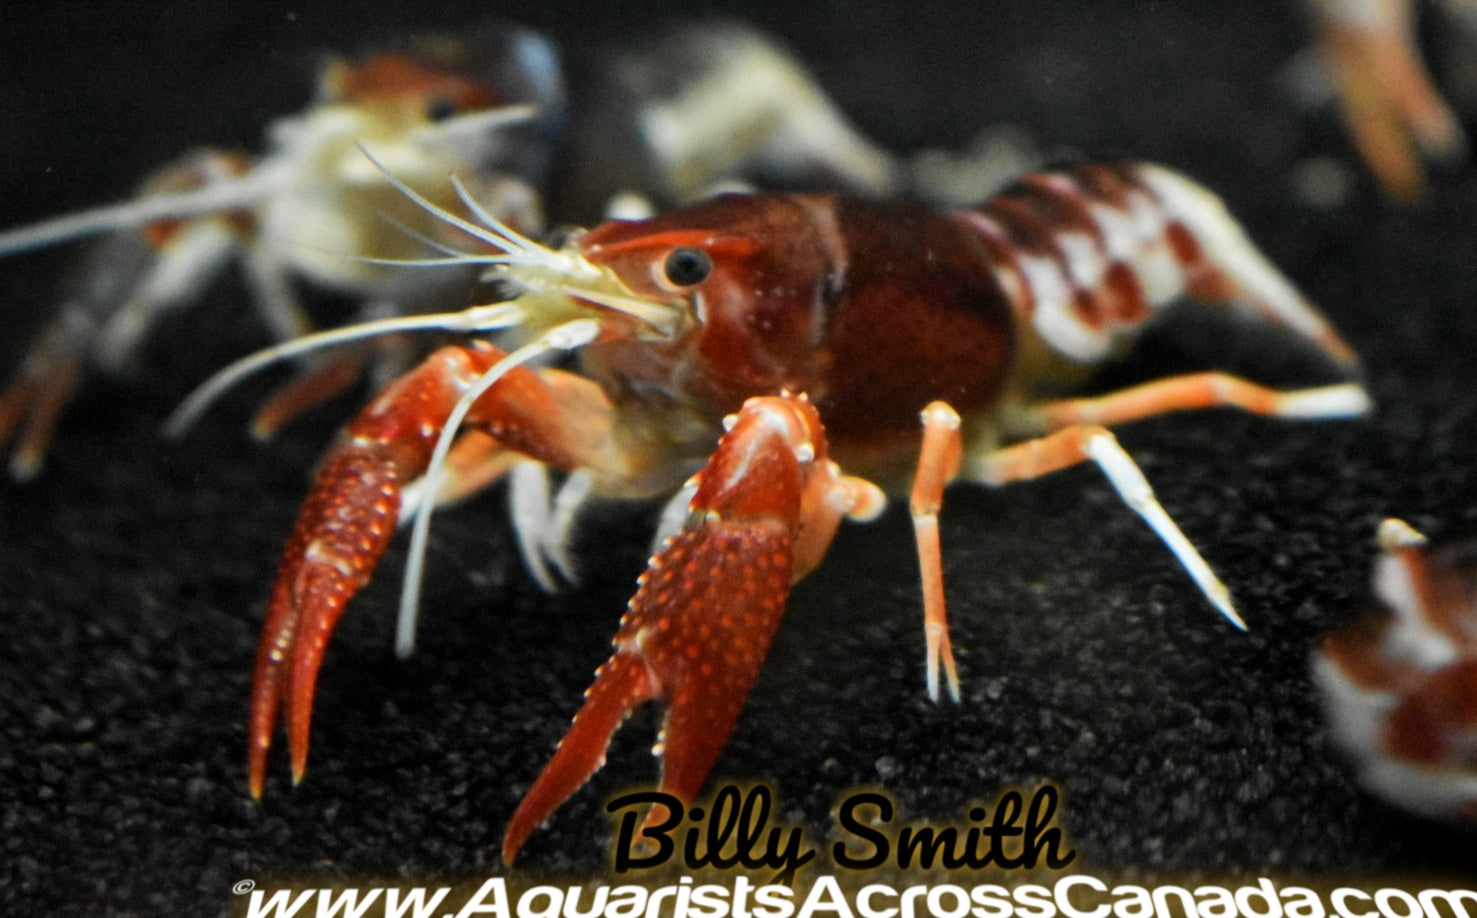 GHOST CRAYFISH (Procambarus clarkii .sp) - Aquarists Across Canada